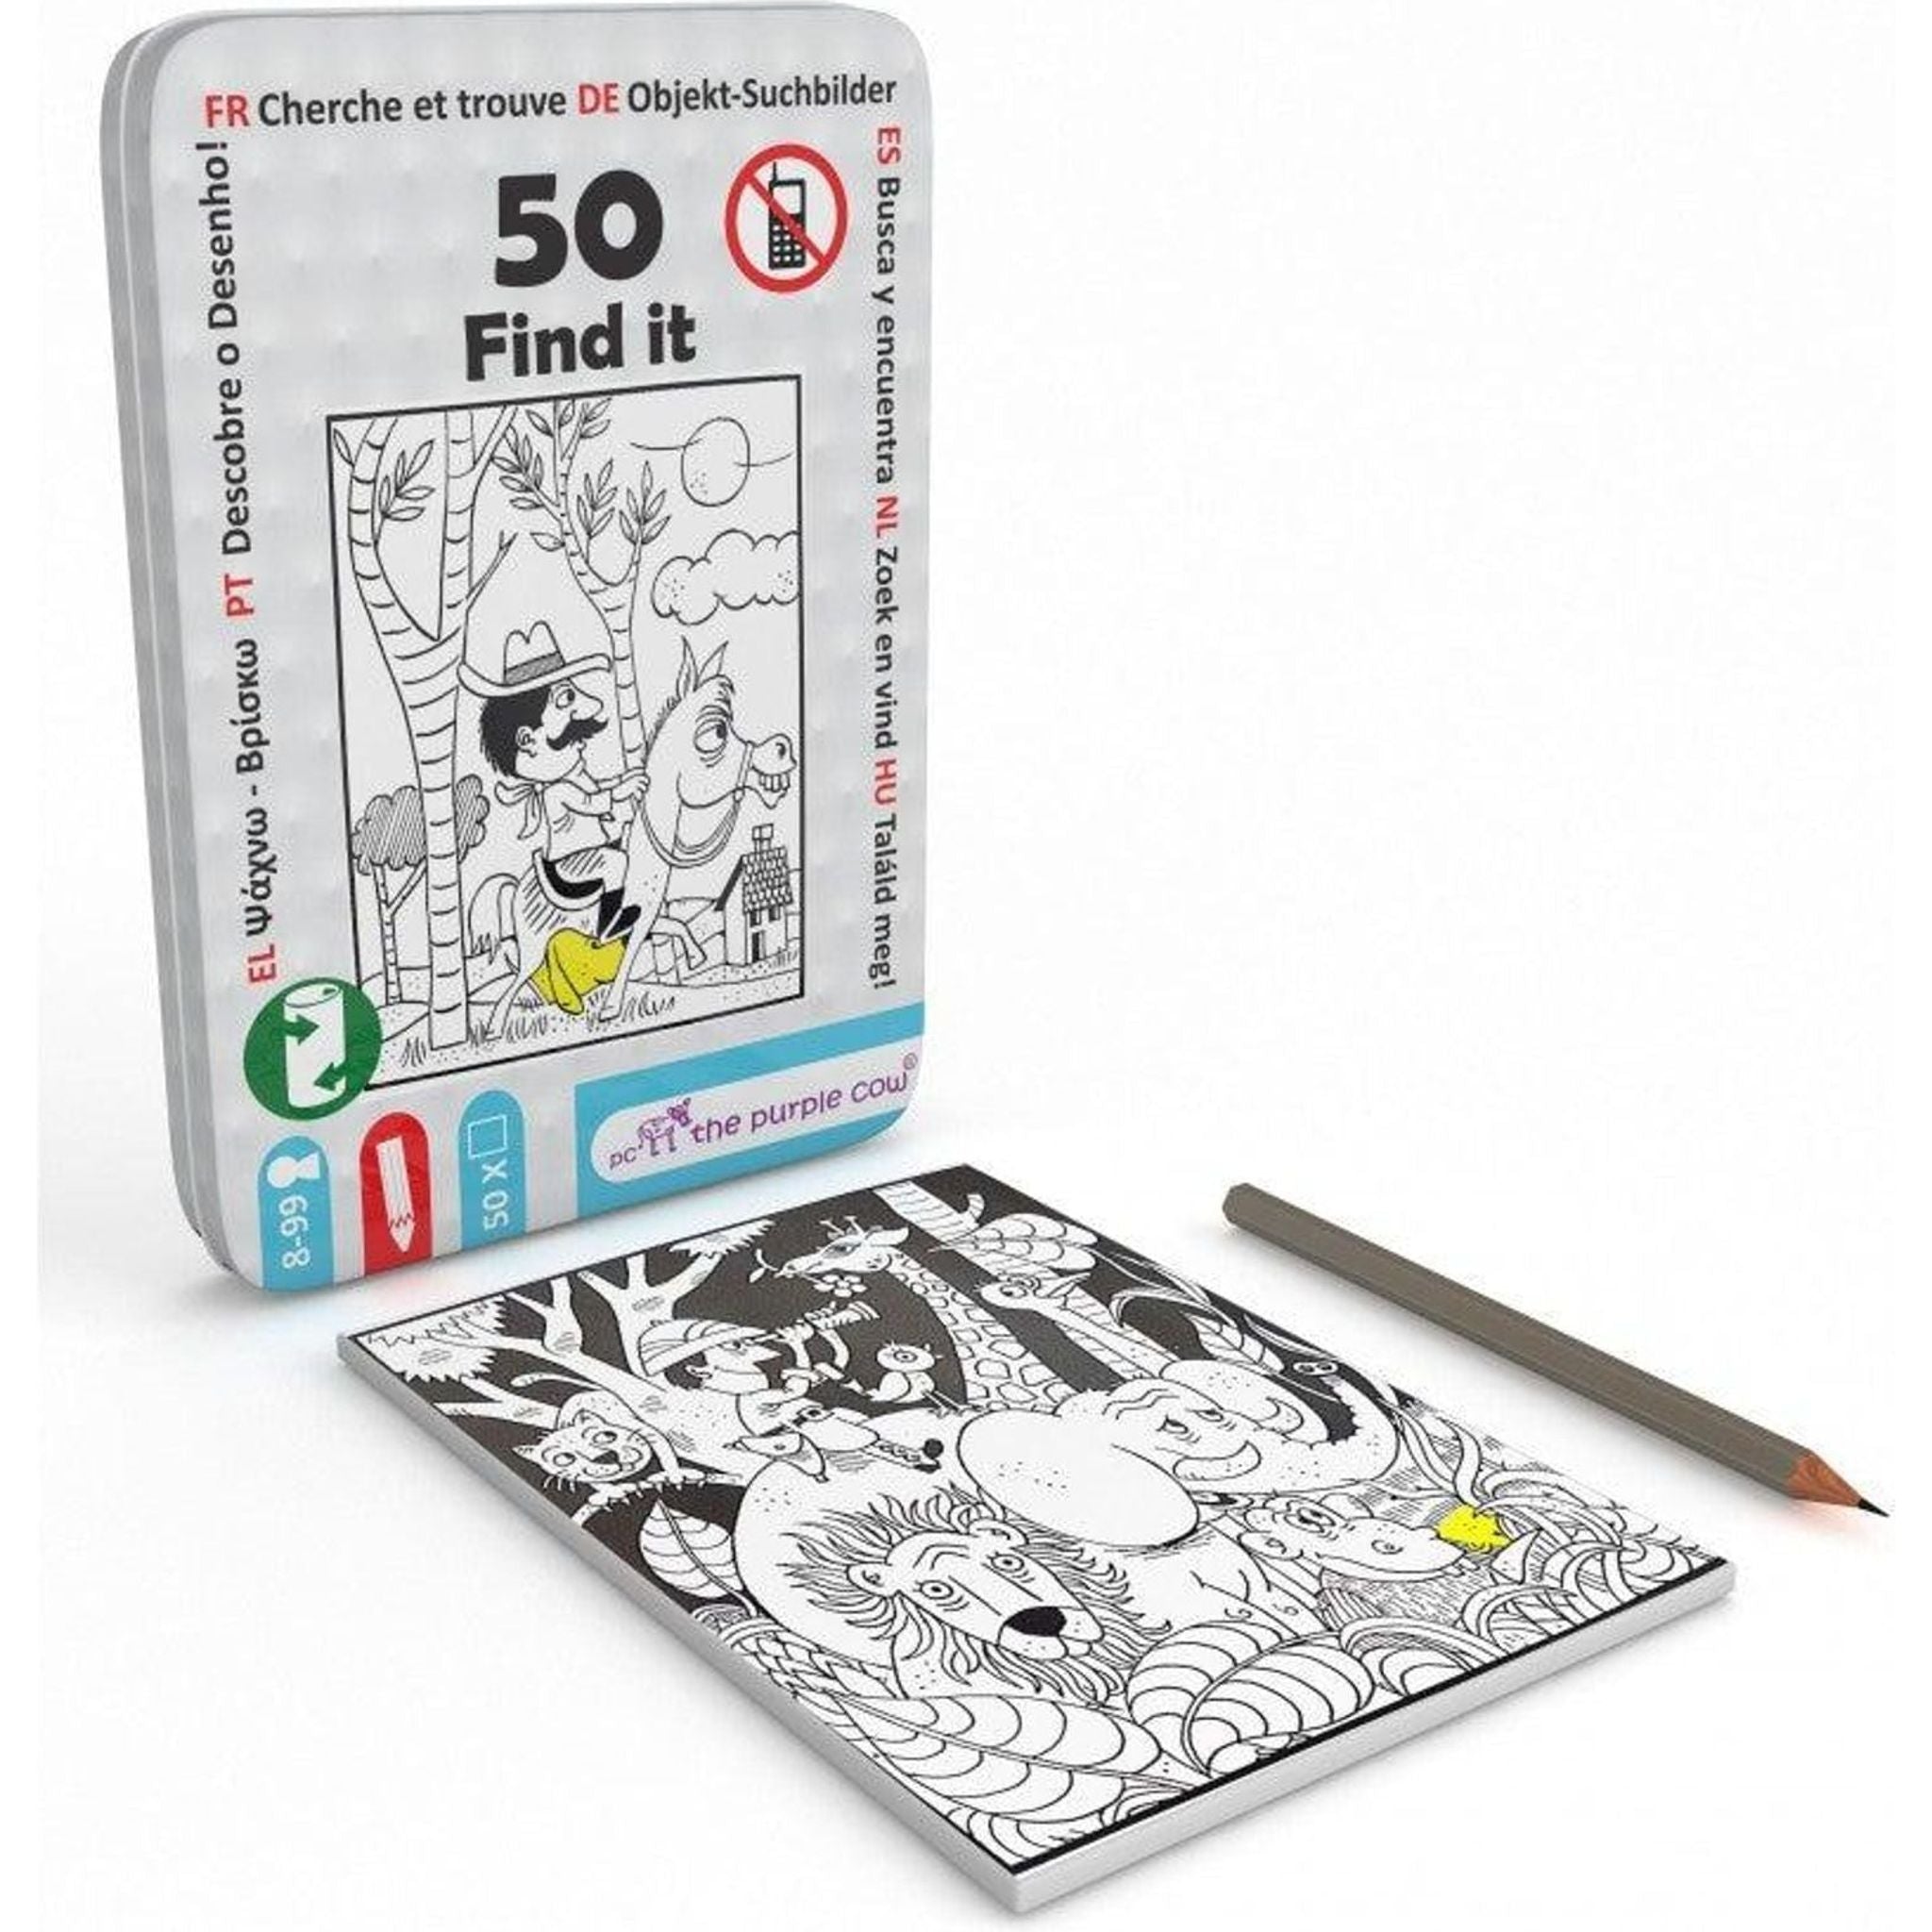 50 Find It - Toybox Tales